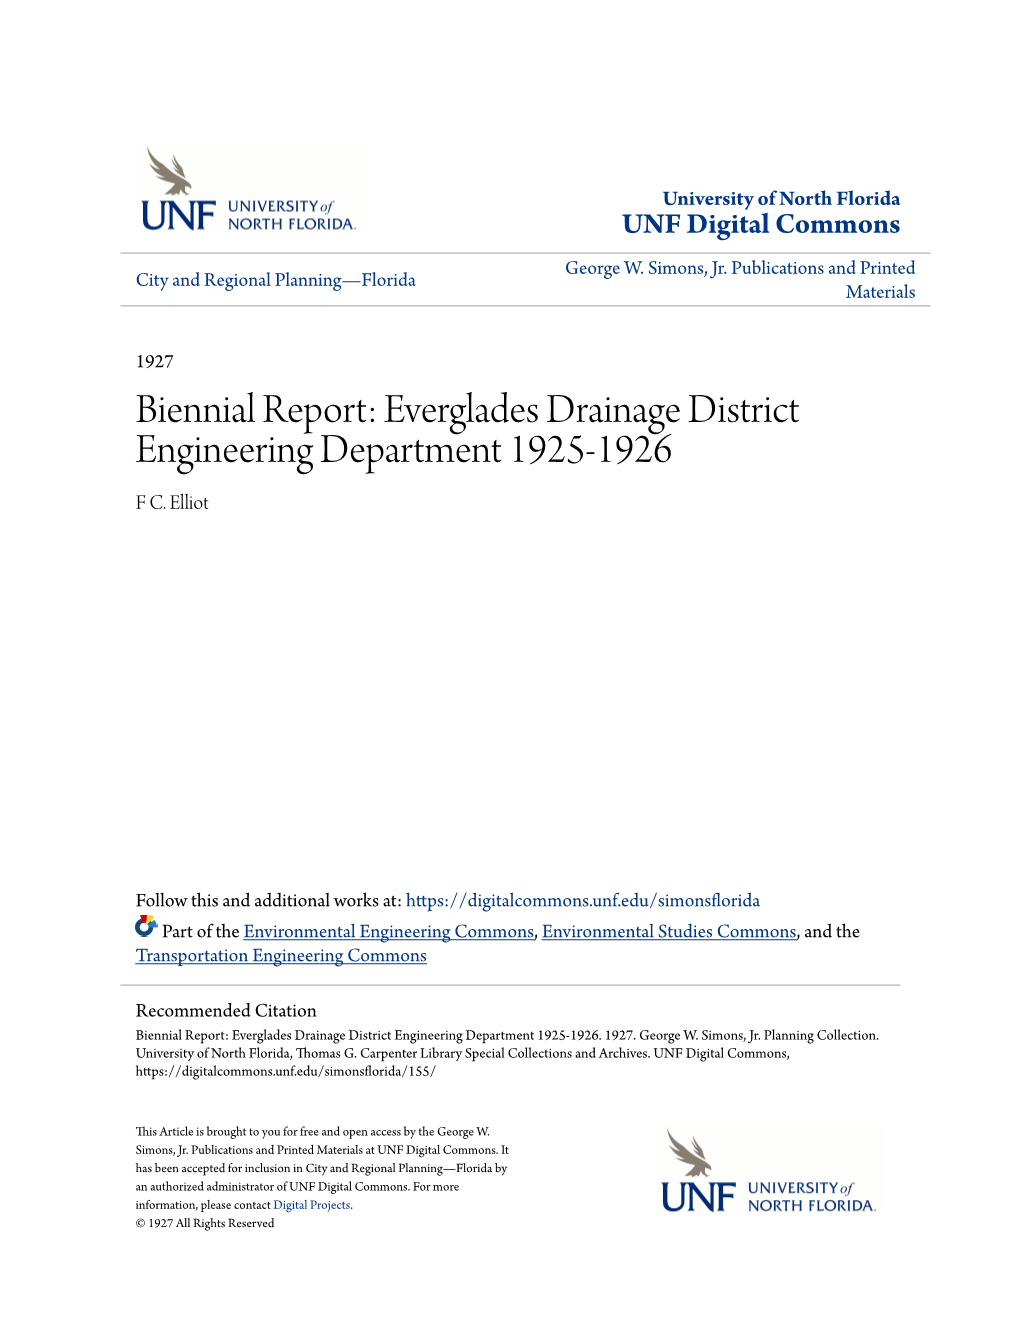 Everglades Drainage District Engineering Department 1925-1926 F C